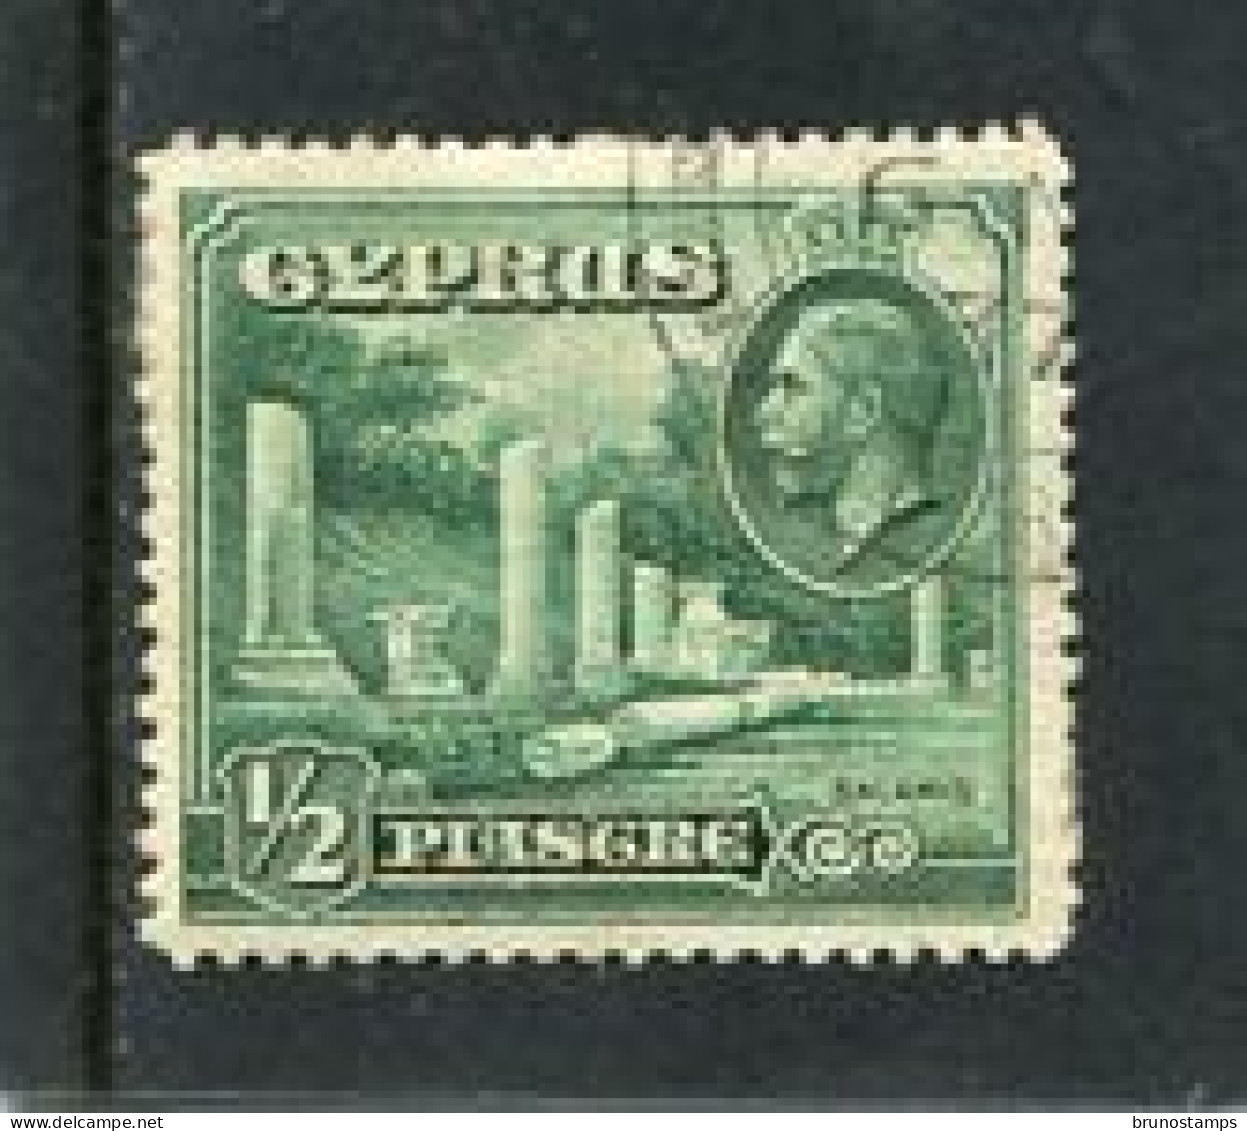 CYPRUS - 1934   GEORGE V  1/2 Pi   FINE USED - Zypern (...-1960)